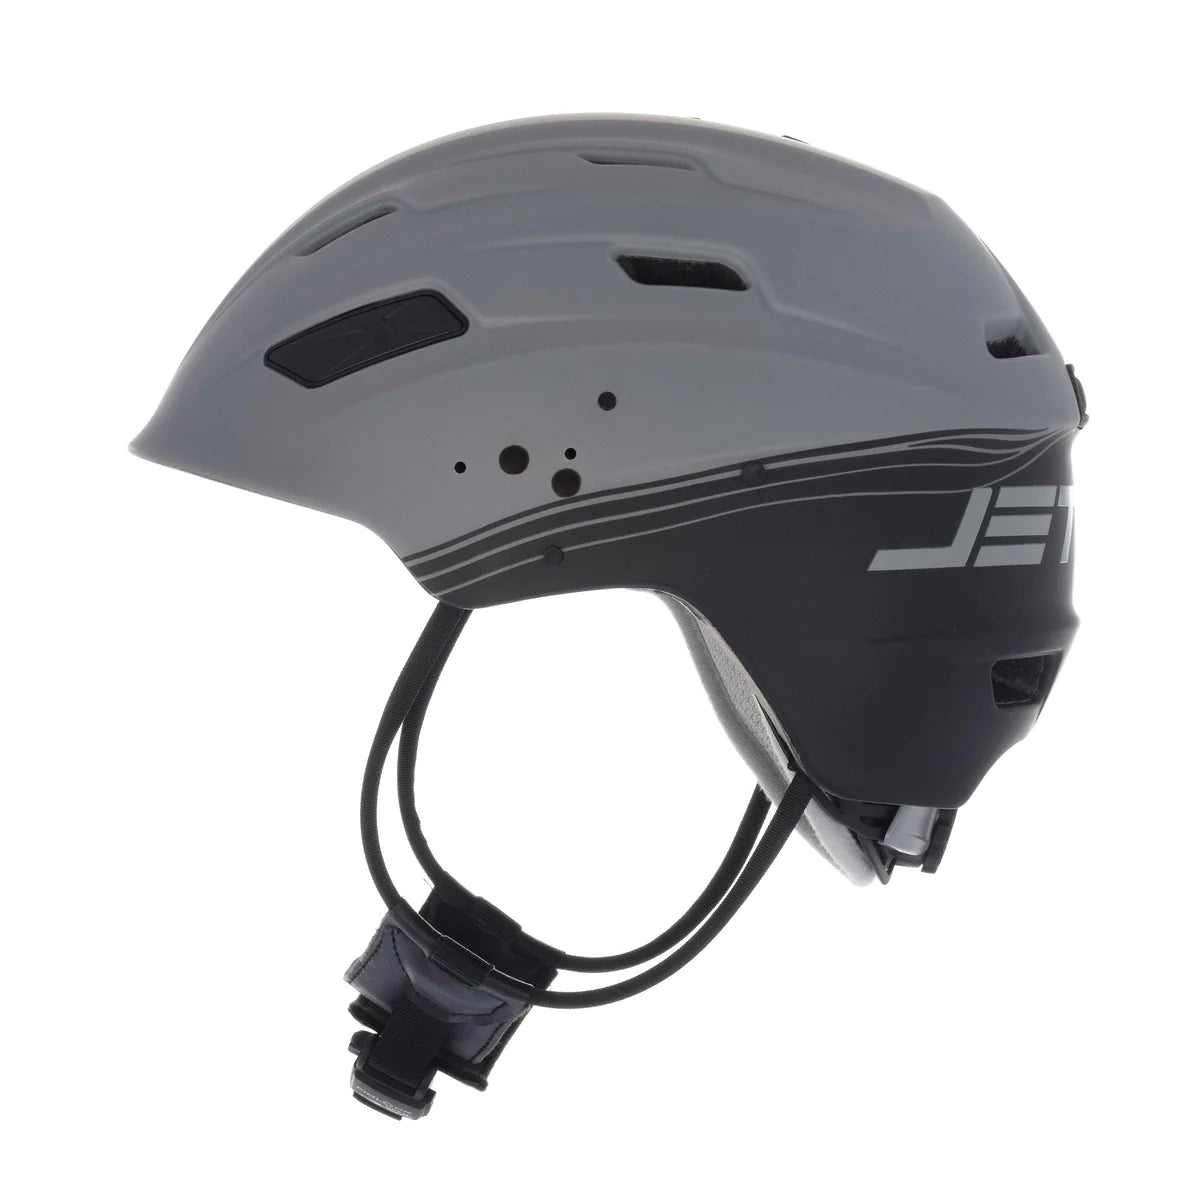 Apco JetCom Helmet with Microavionics PM100 Headset